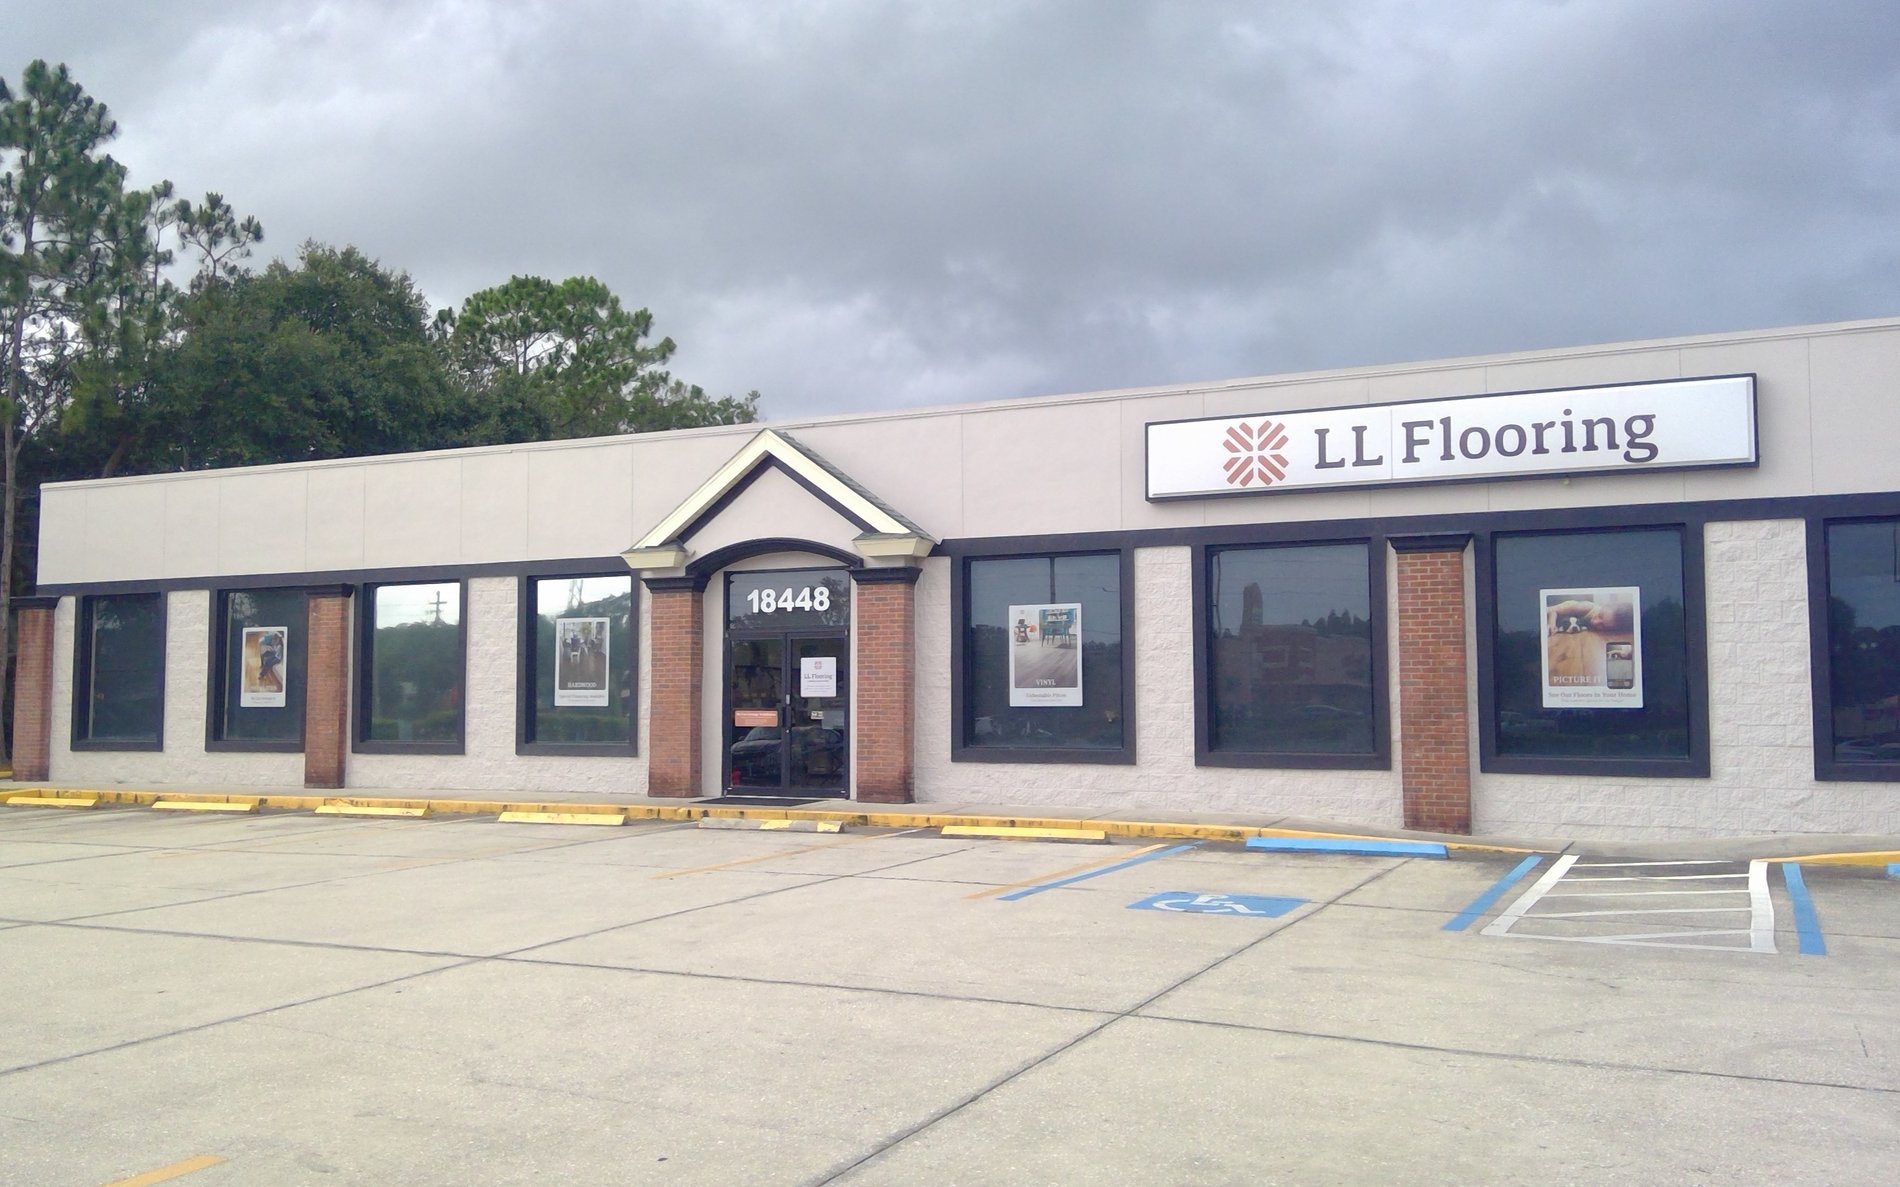 LL Flooring #1045 Lutz | 18448 N US Highway 41 | Storefront